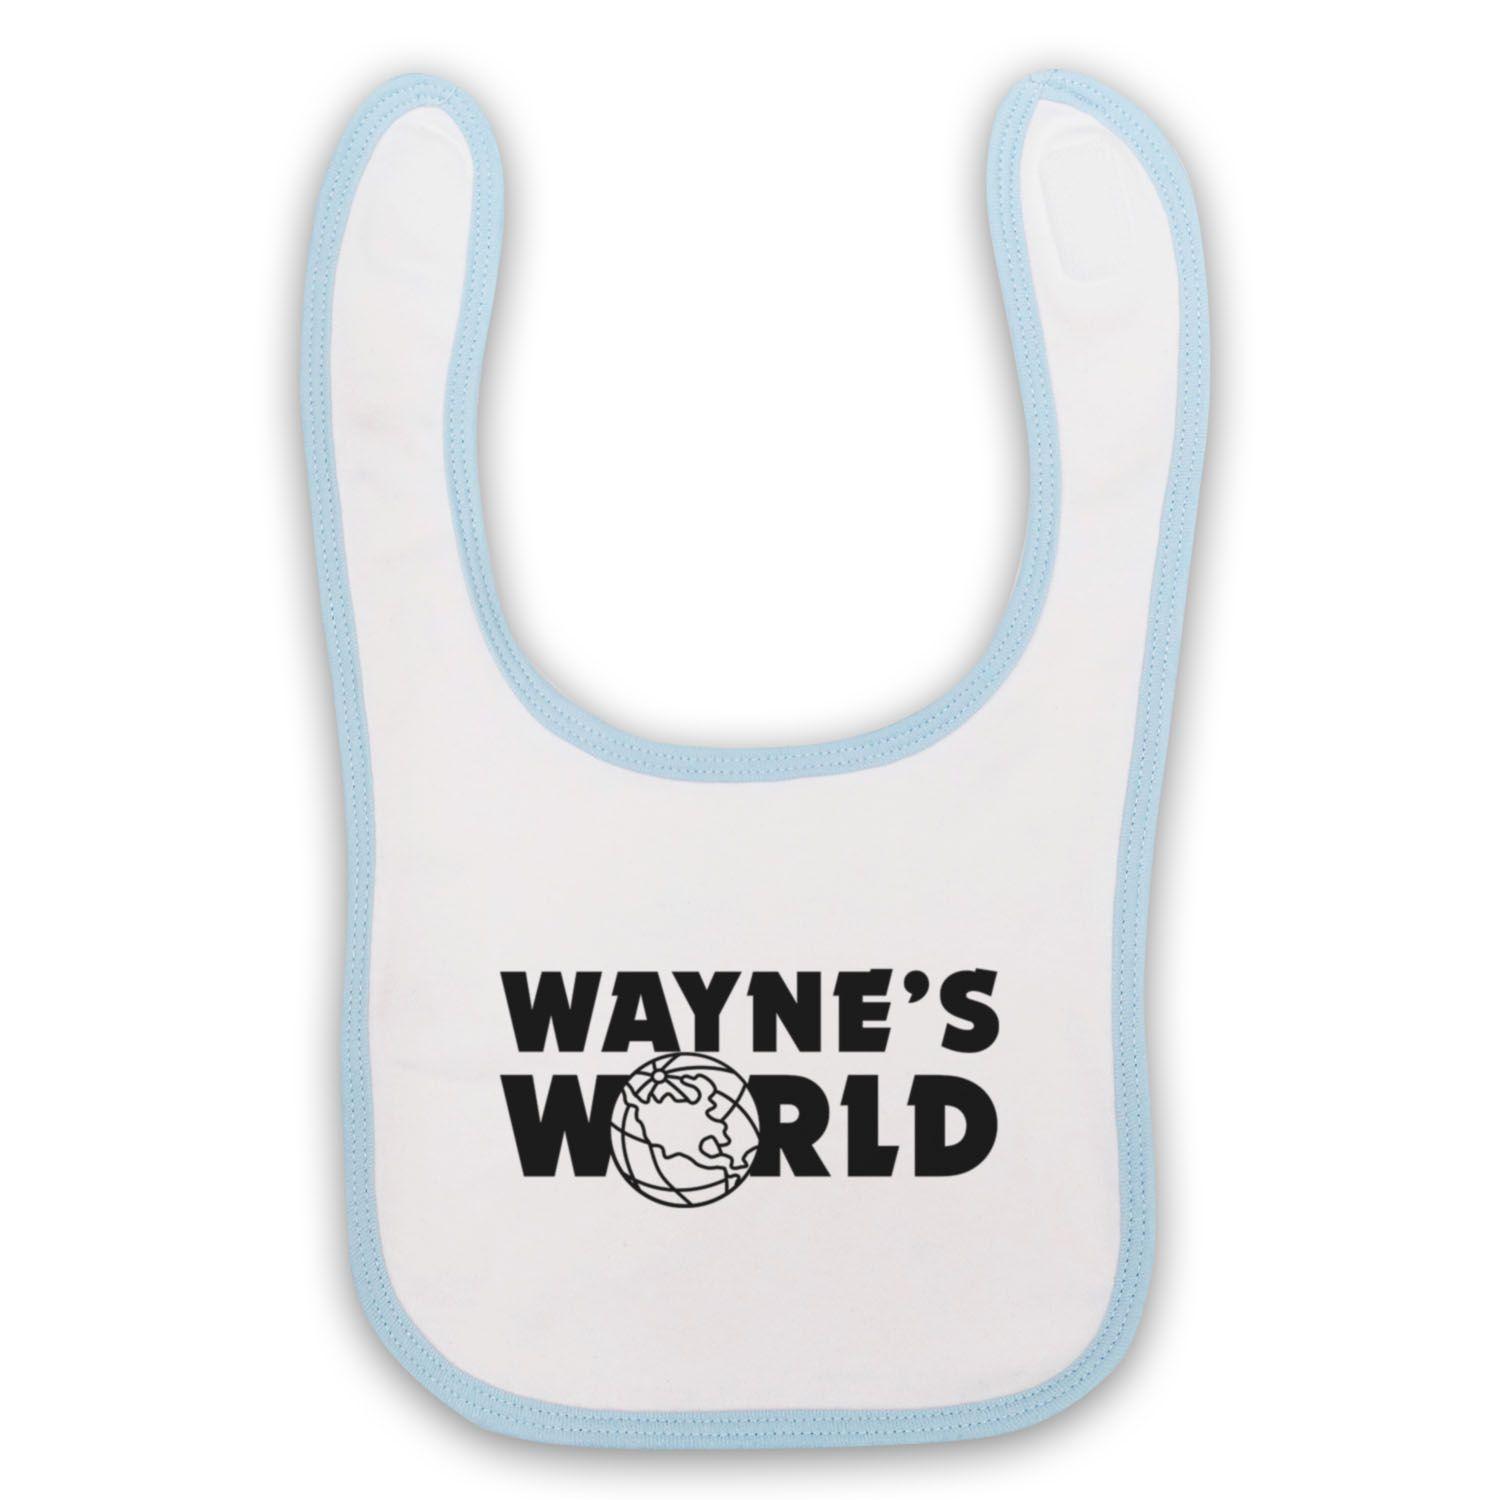 Baby in a World with Blue Logo - WAYNE'S WORLD LOGO UNOFFICIAL ROCK MUSIC FILM GARTH BABY BIB CUTE